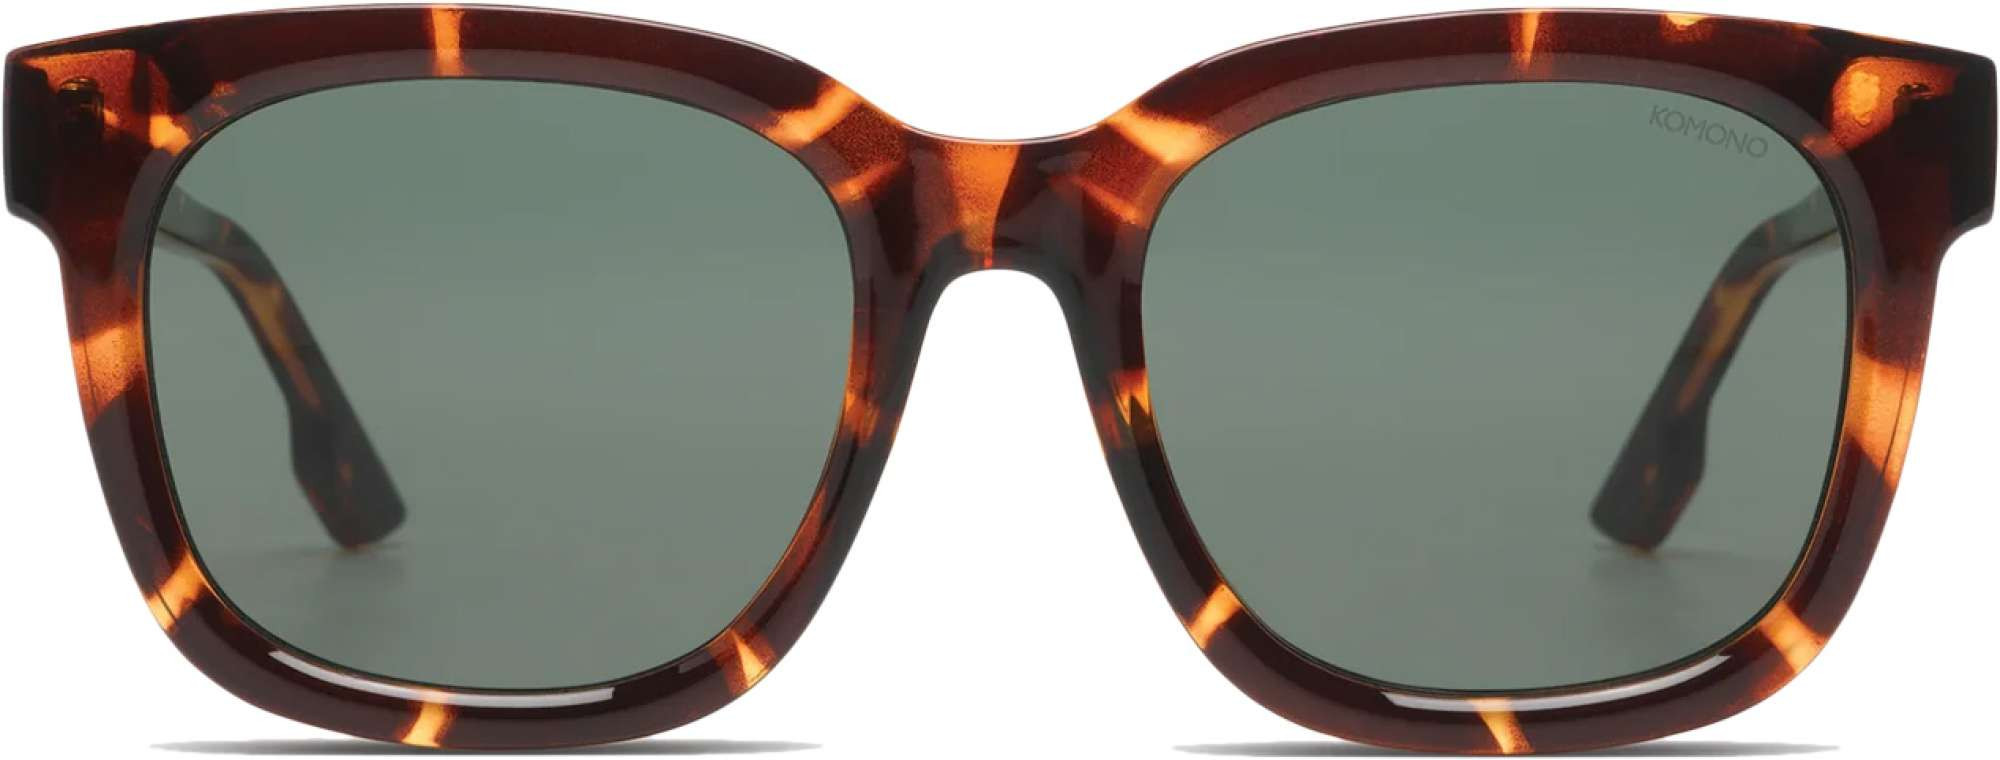 Afbeelding van Komono Sienna havana sunglasses